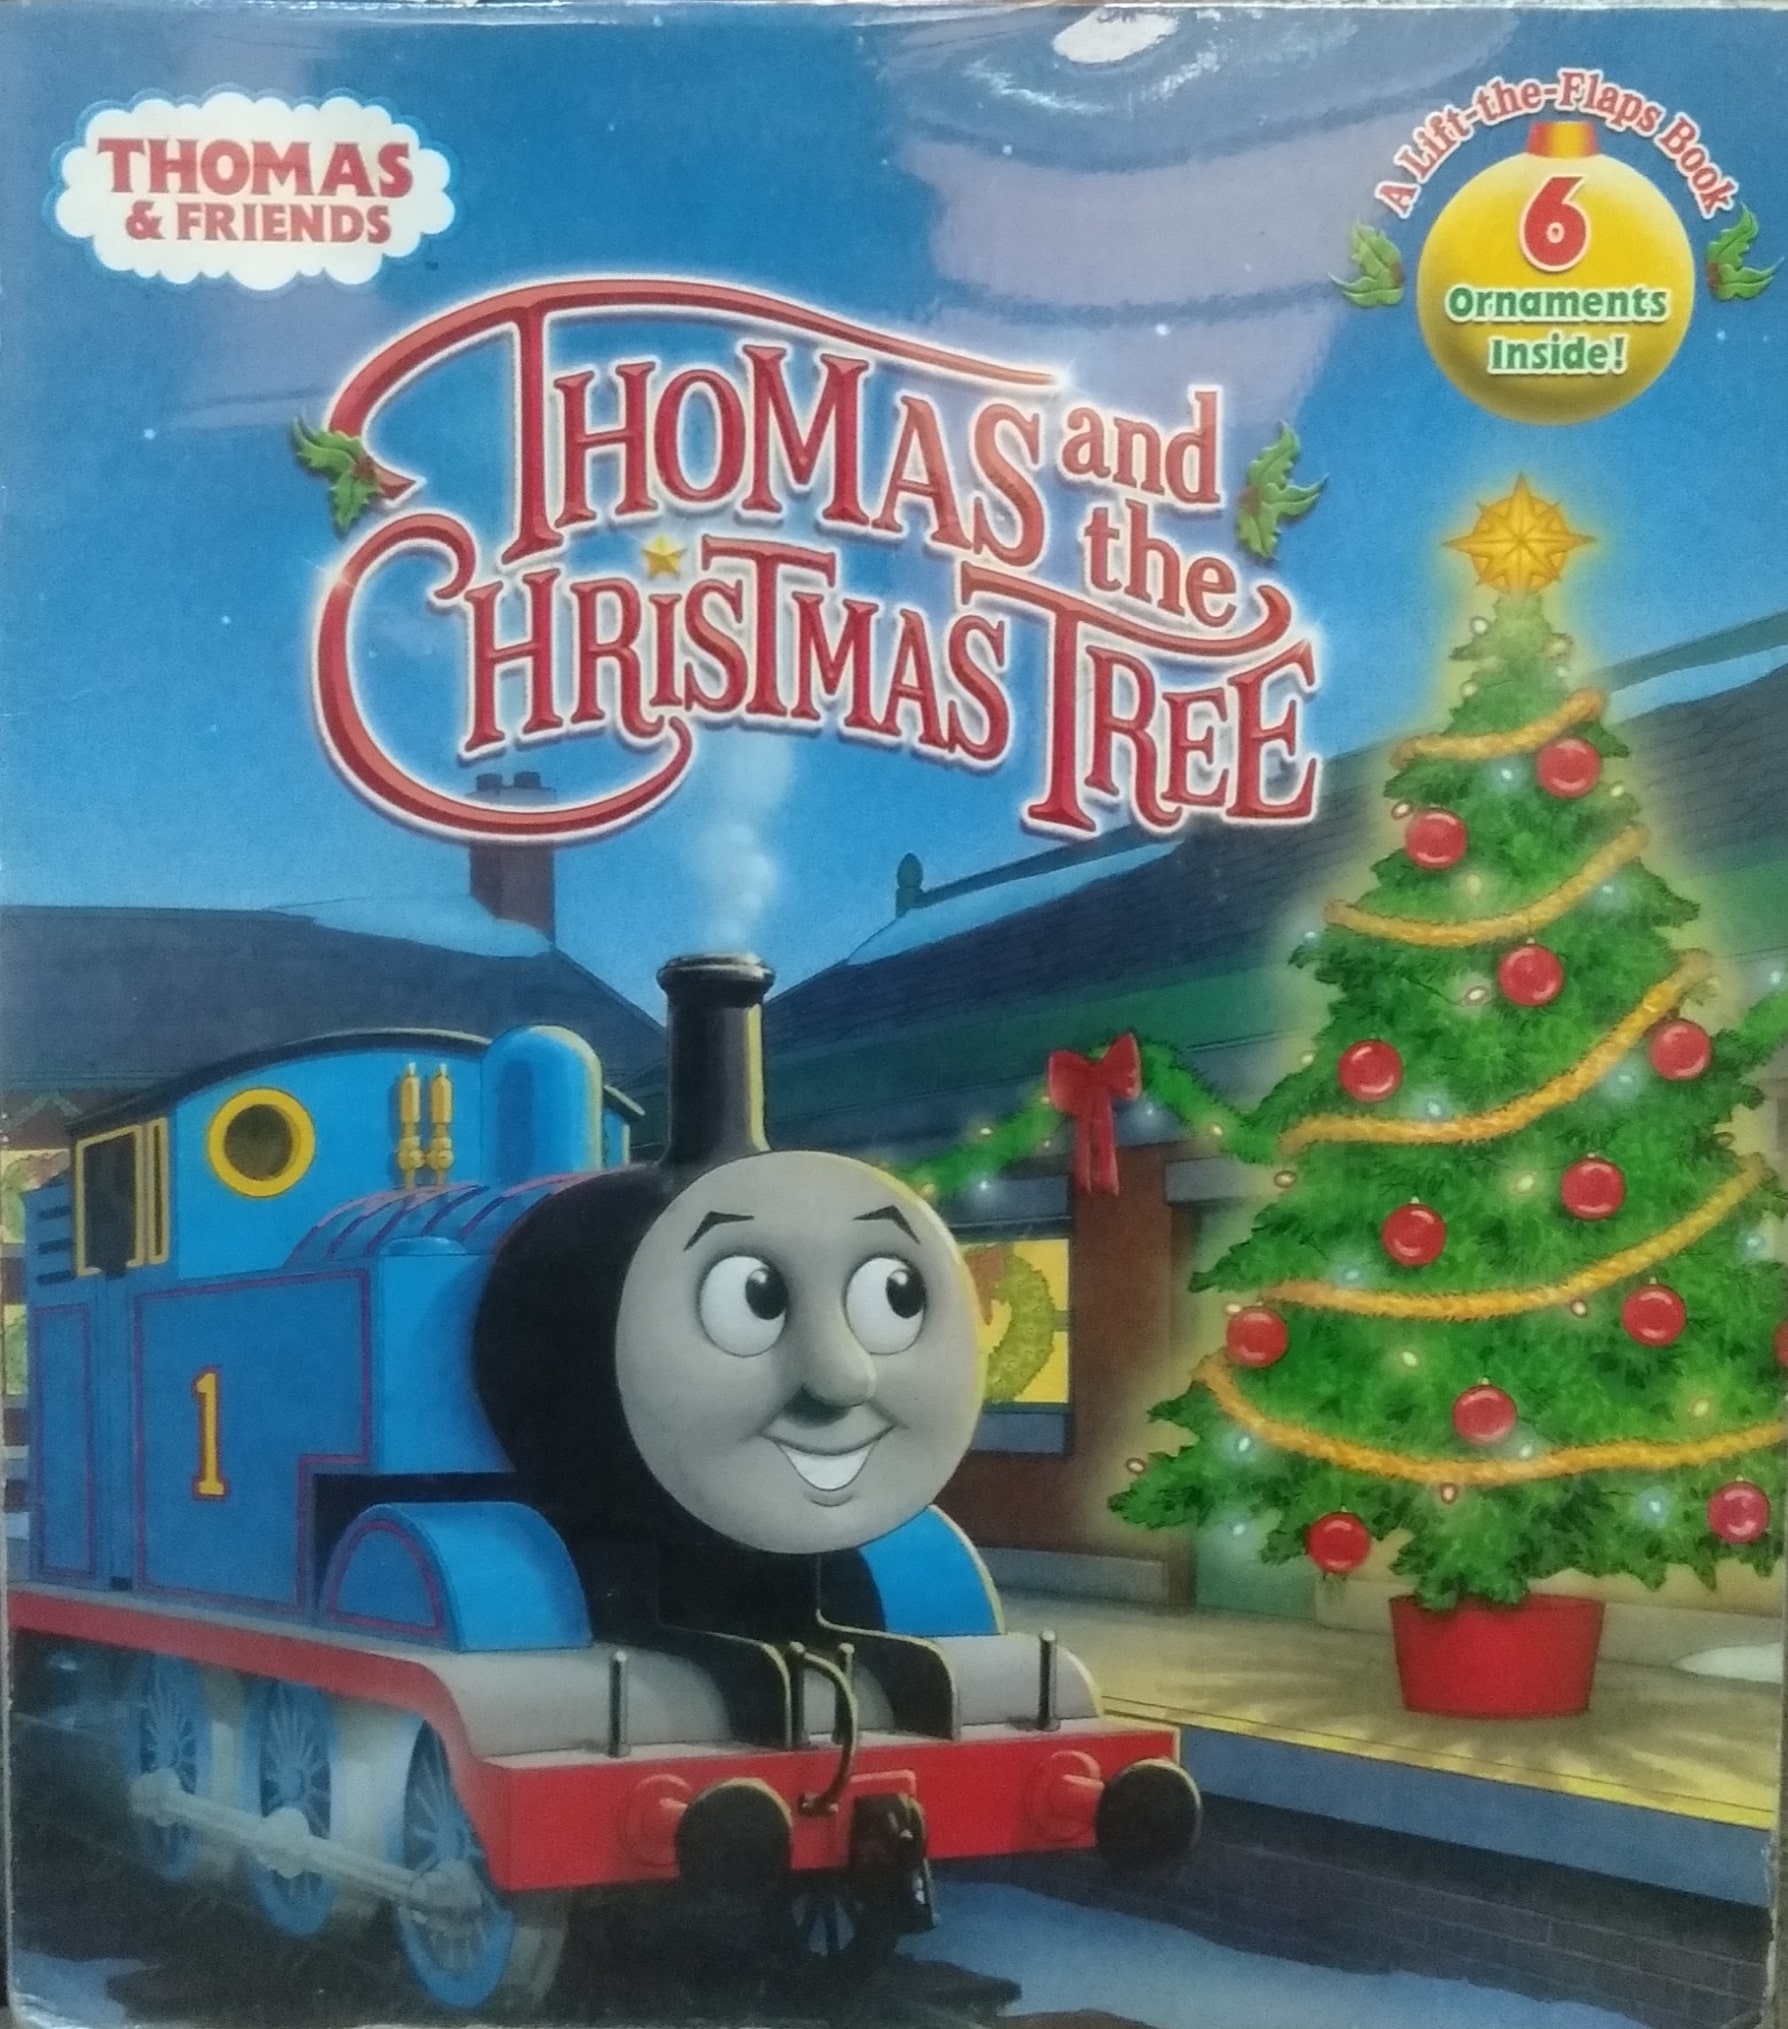 IMG : Thomas and friends - Thomas and the Christmas Tree